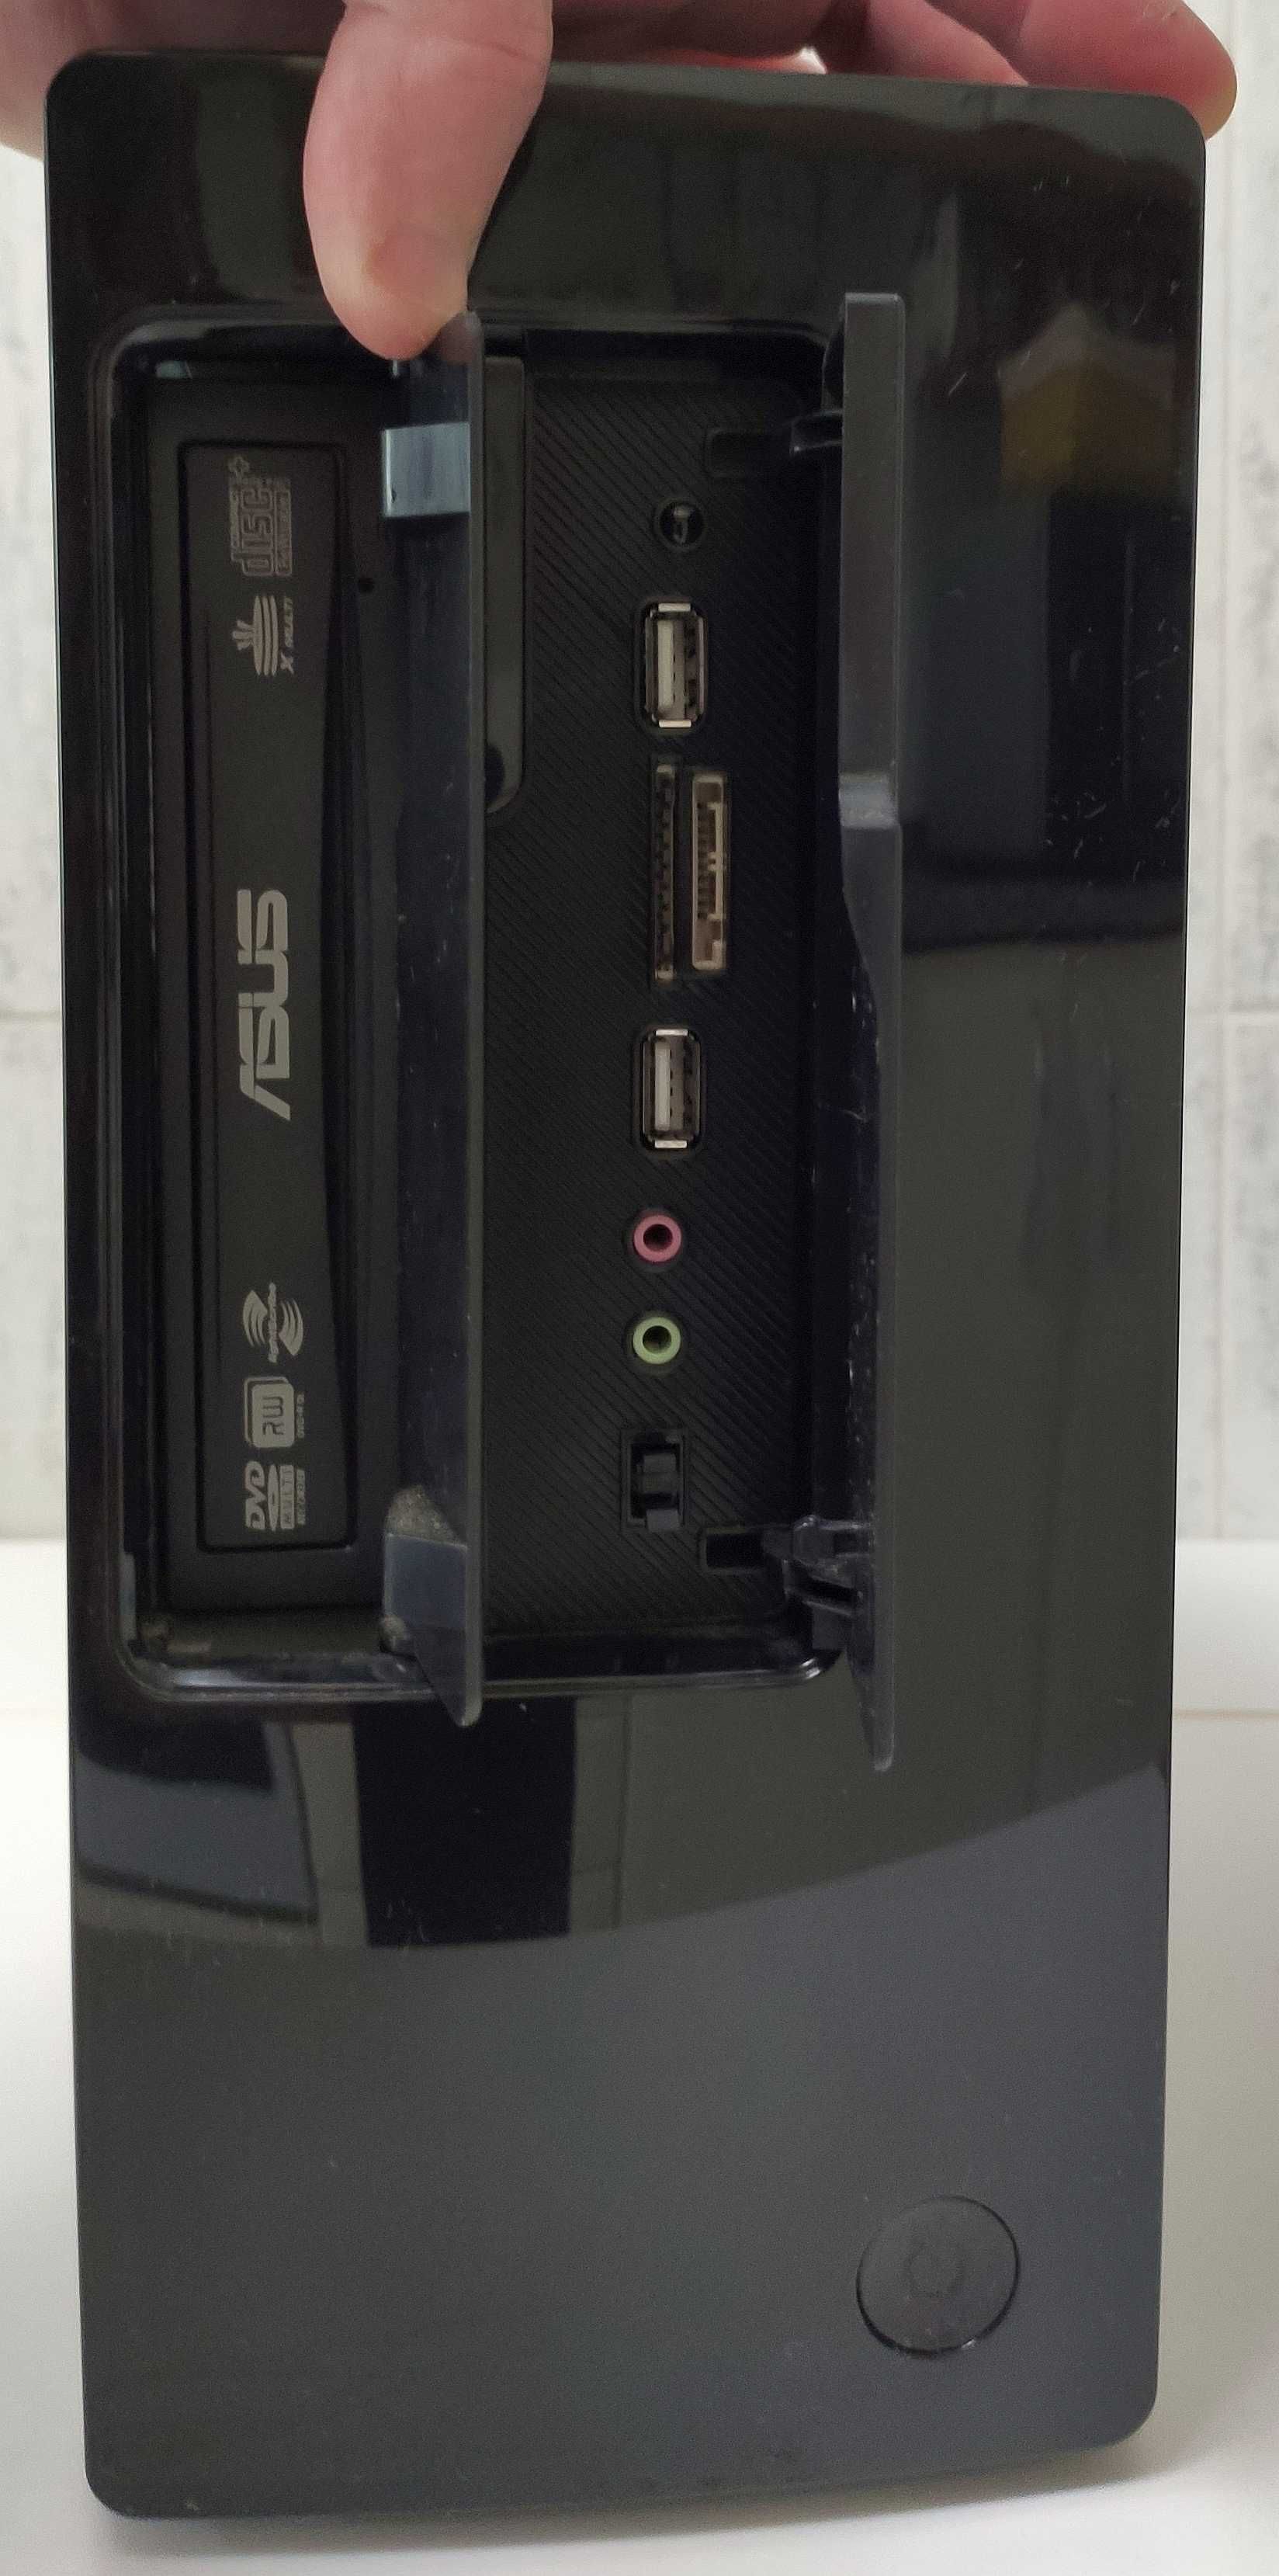 Computador Mini ITX com o processador Intel E8400